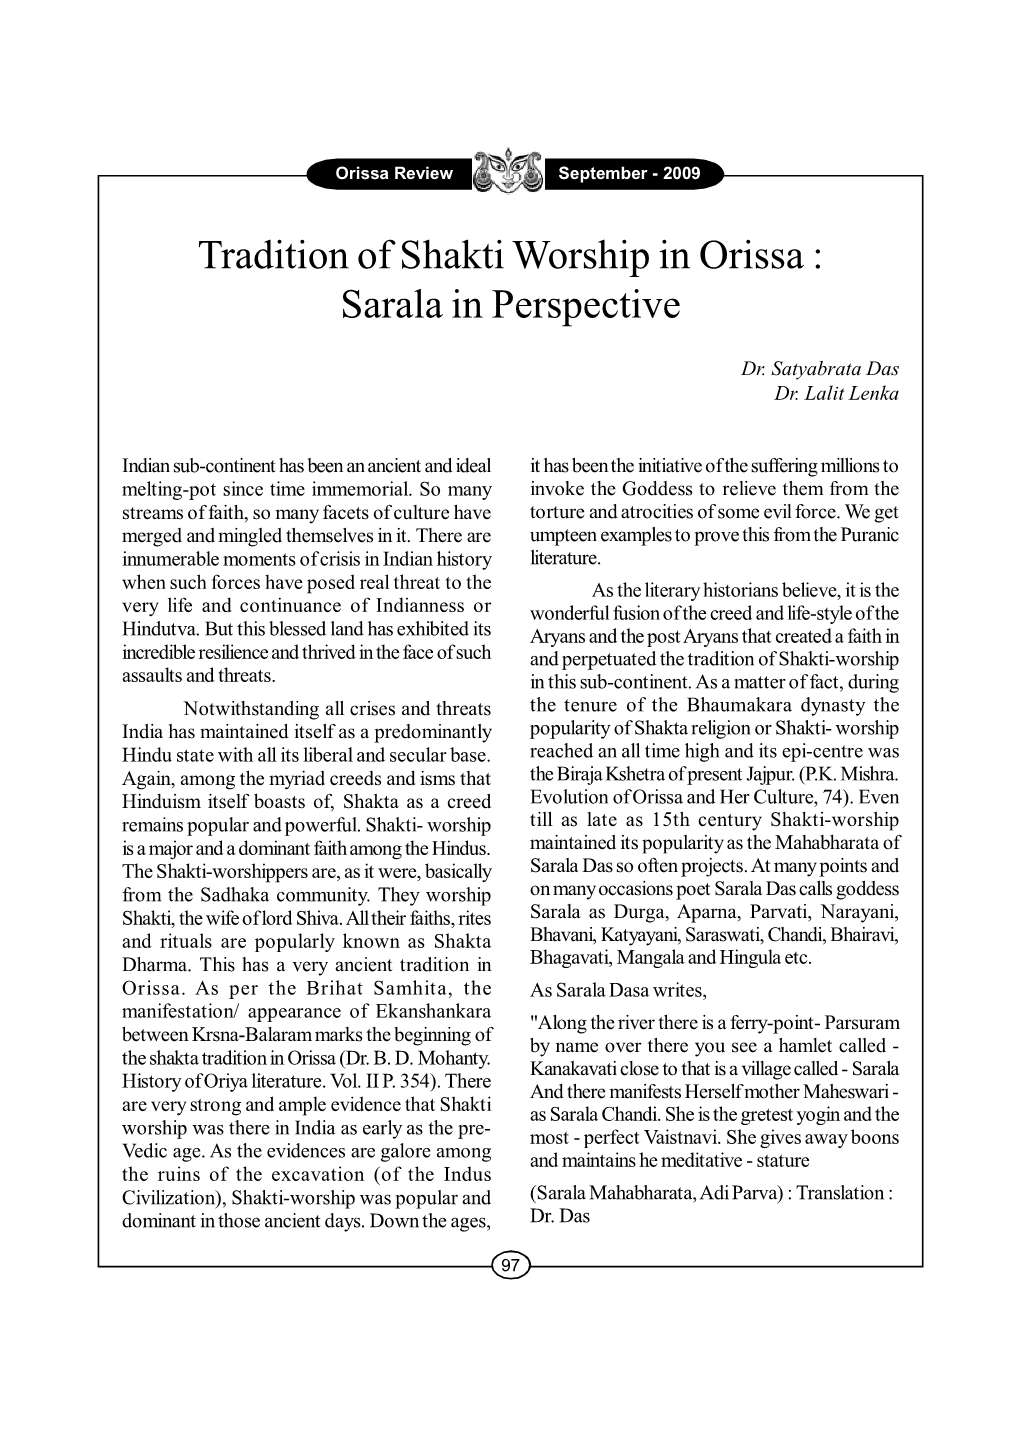 Tradition of Shakti Worship in Orissa : Sarala in Perspective